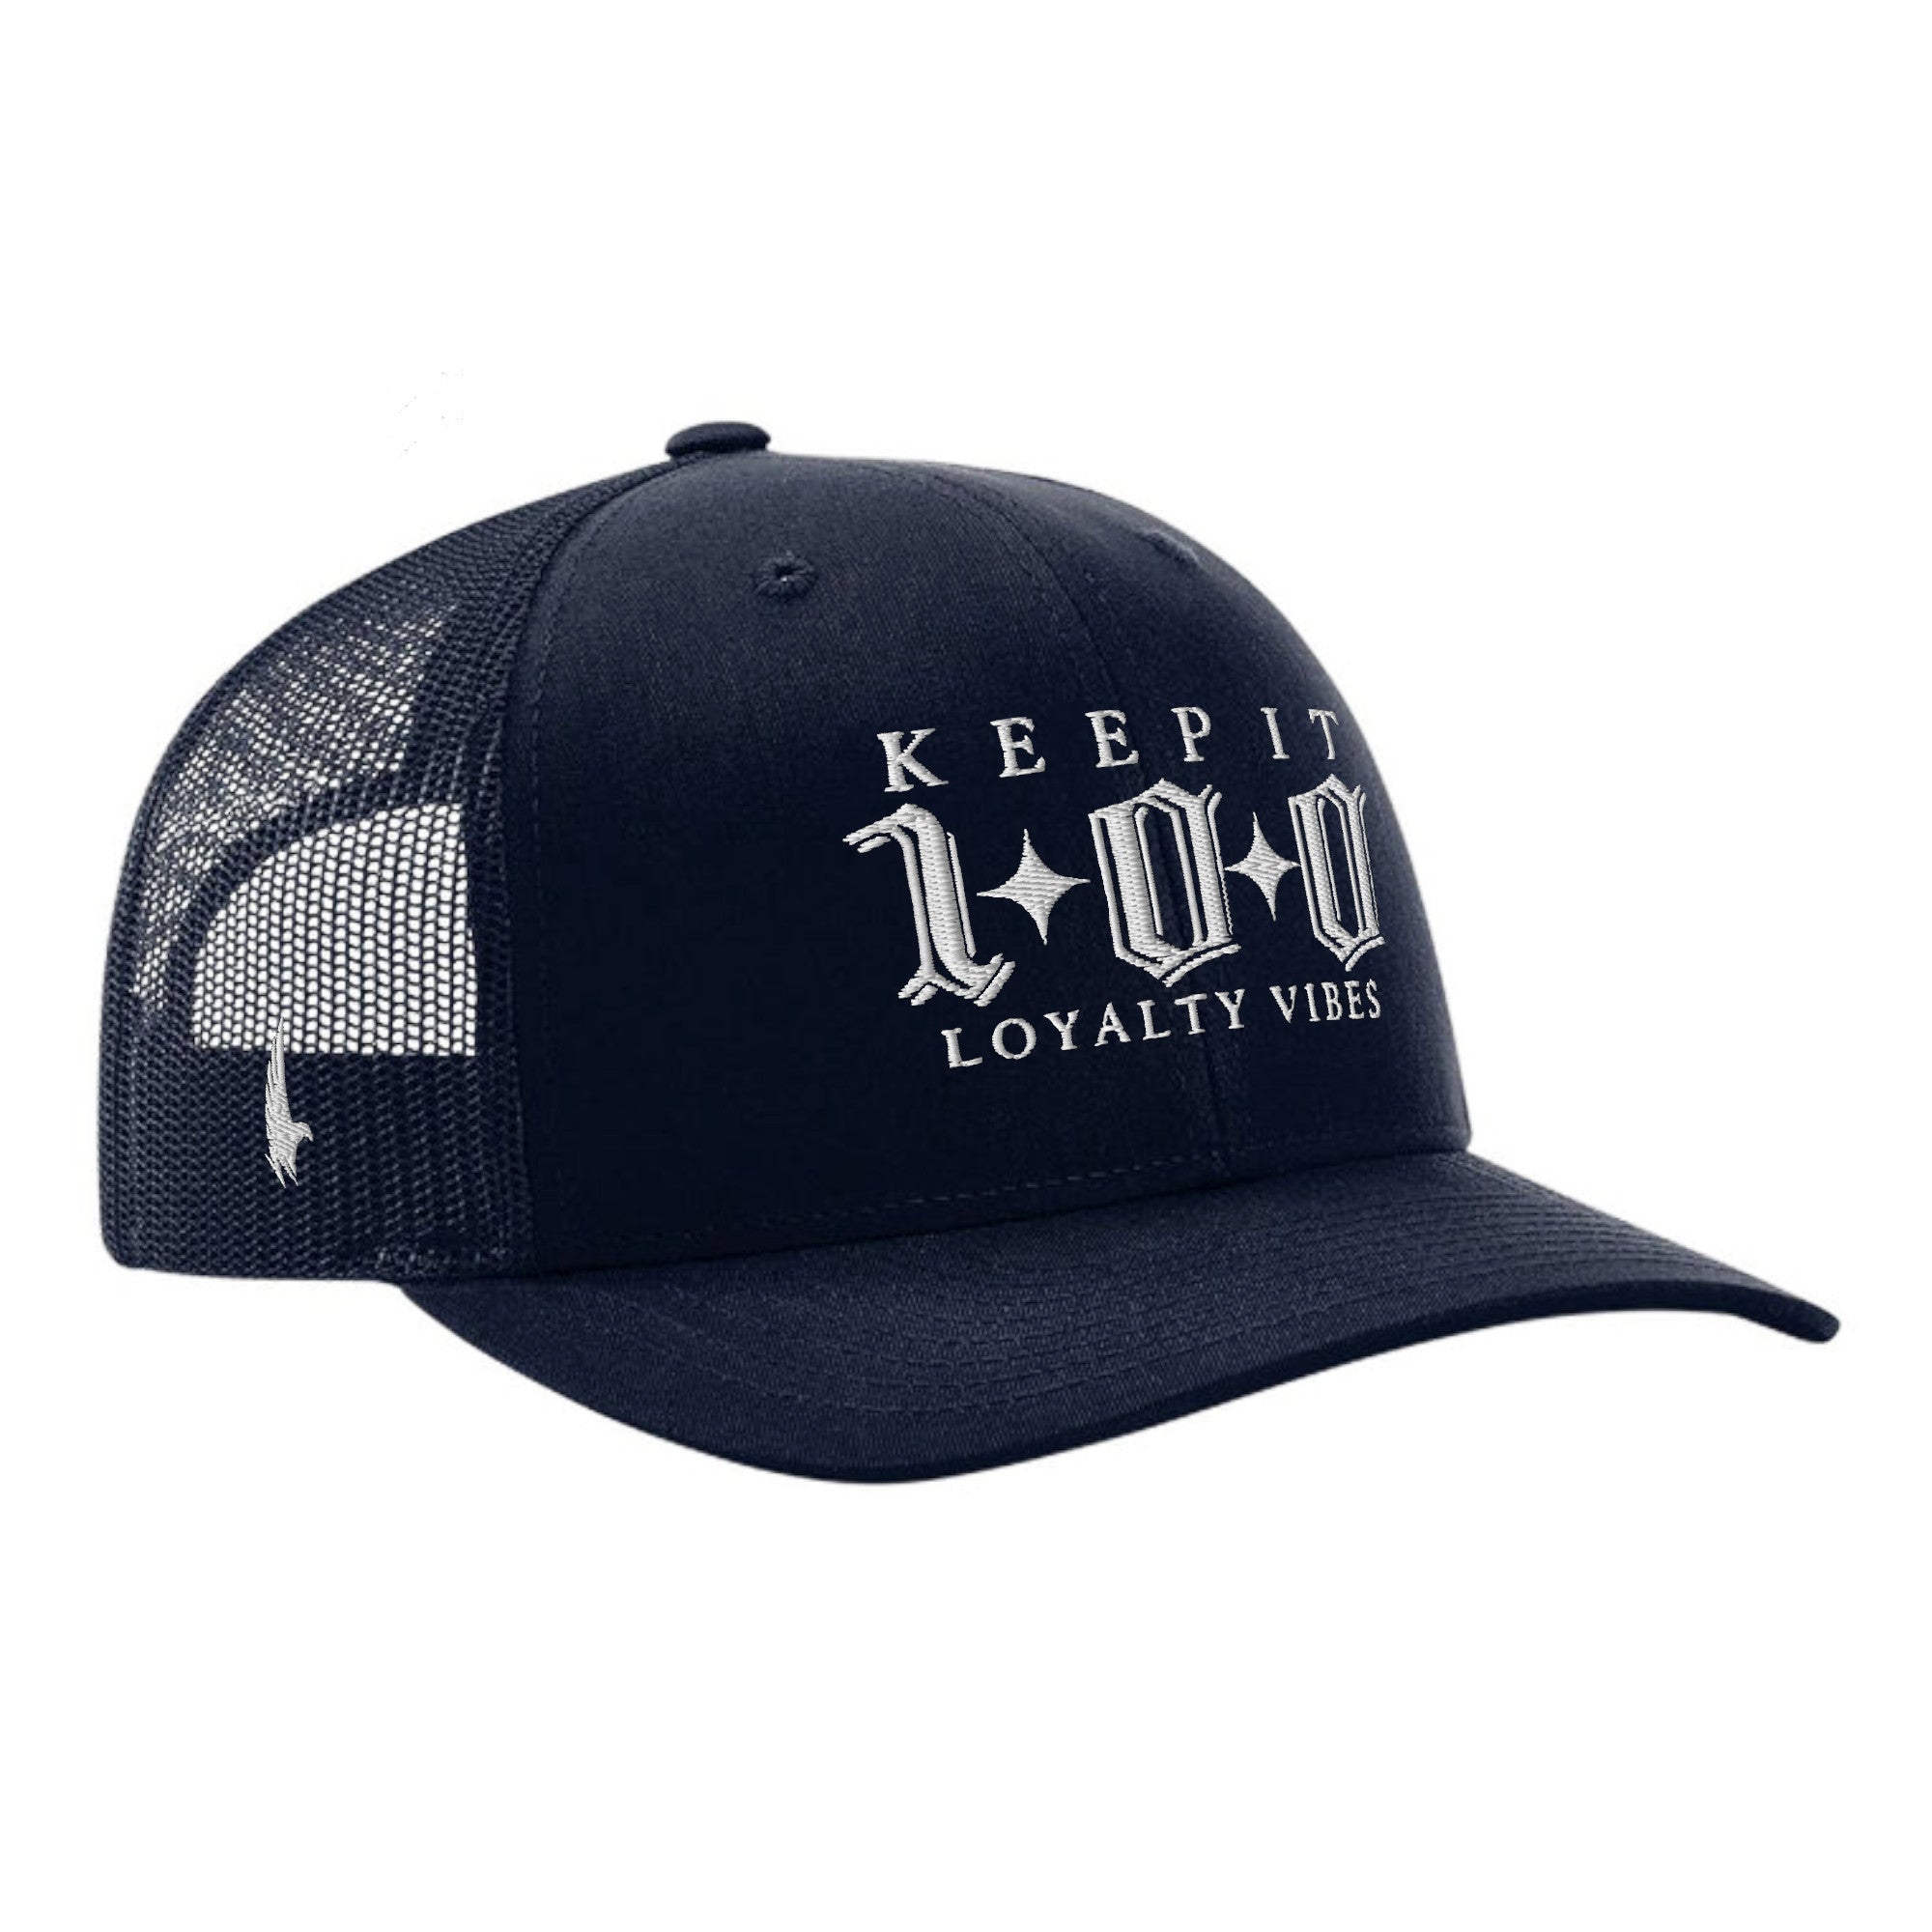 Keep It 100 Trucker Hat Navy Blue OS - Loyalty Vibes